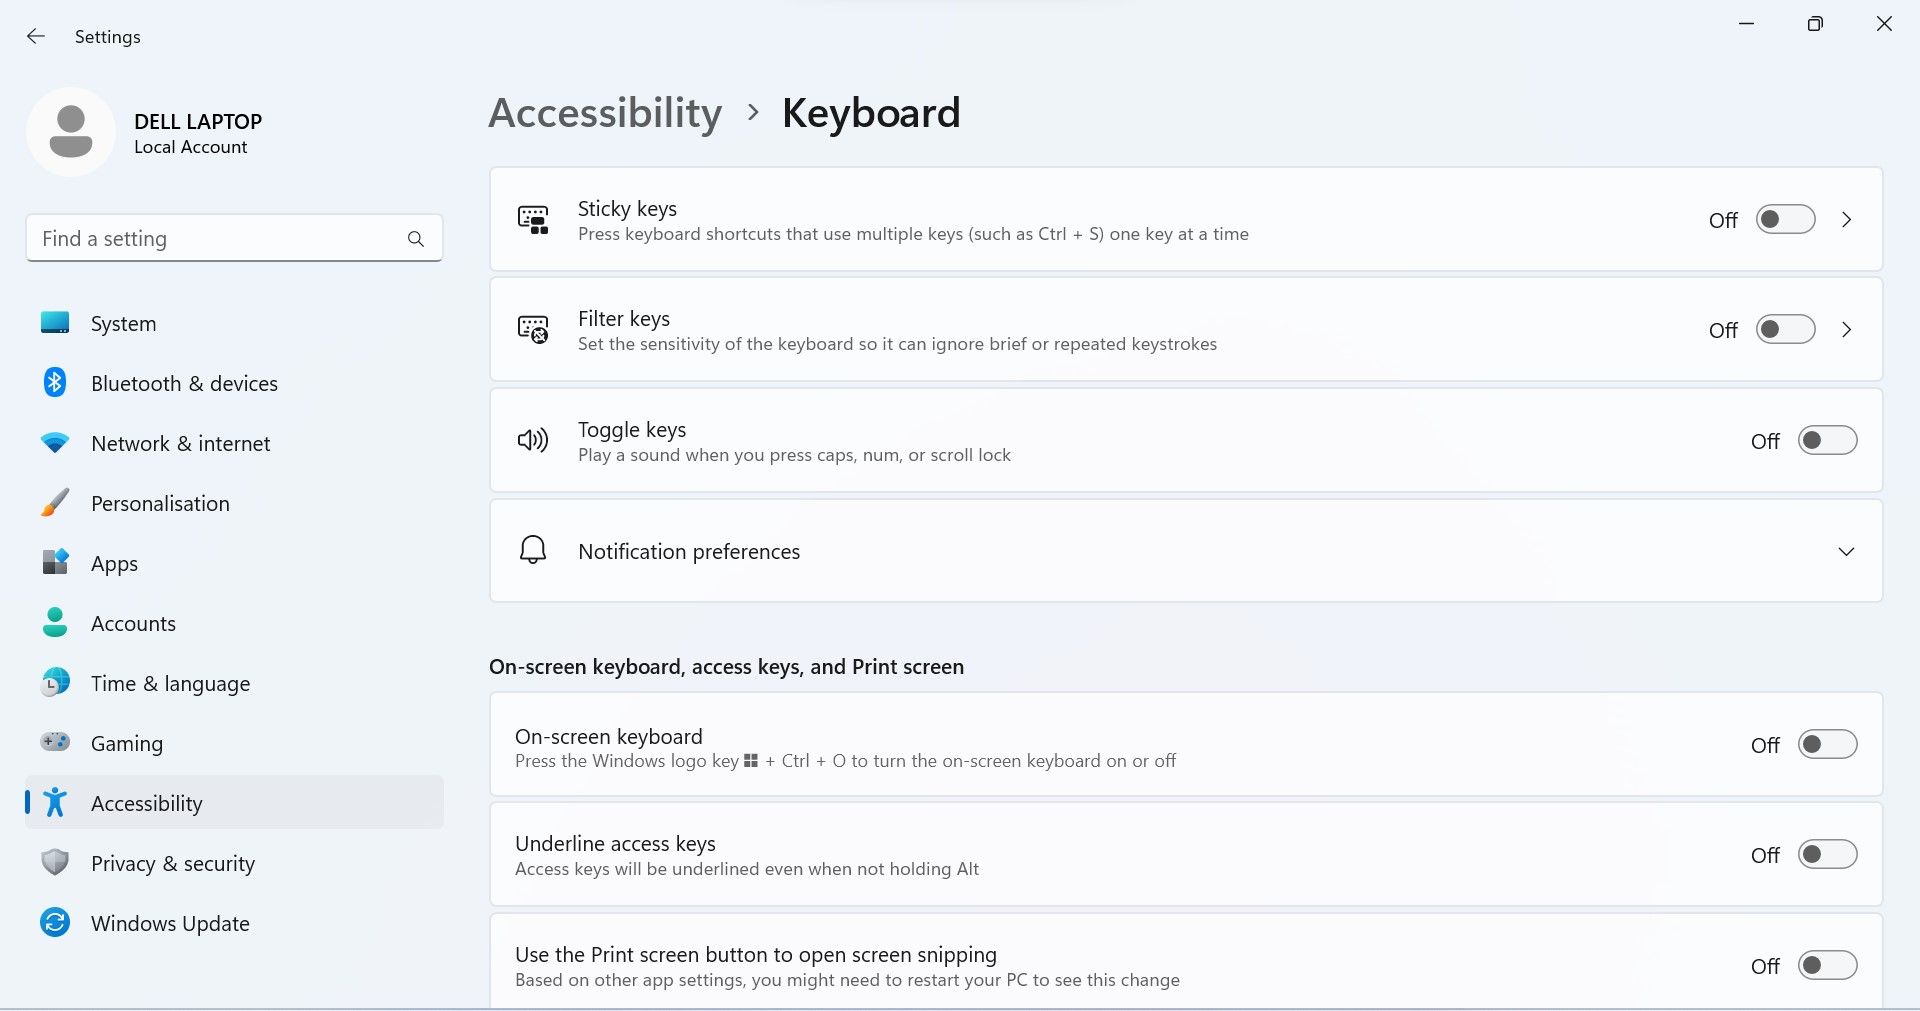 Disable Certain Keyboard Settings in the Windows Settings App